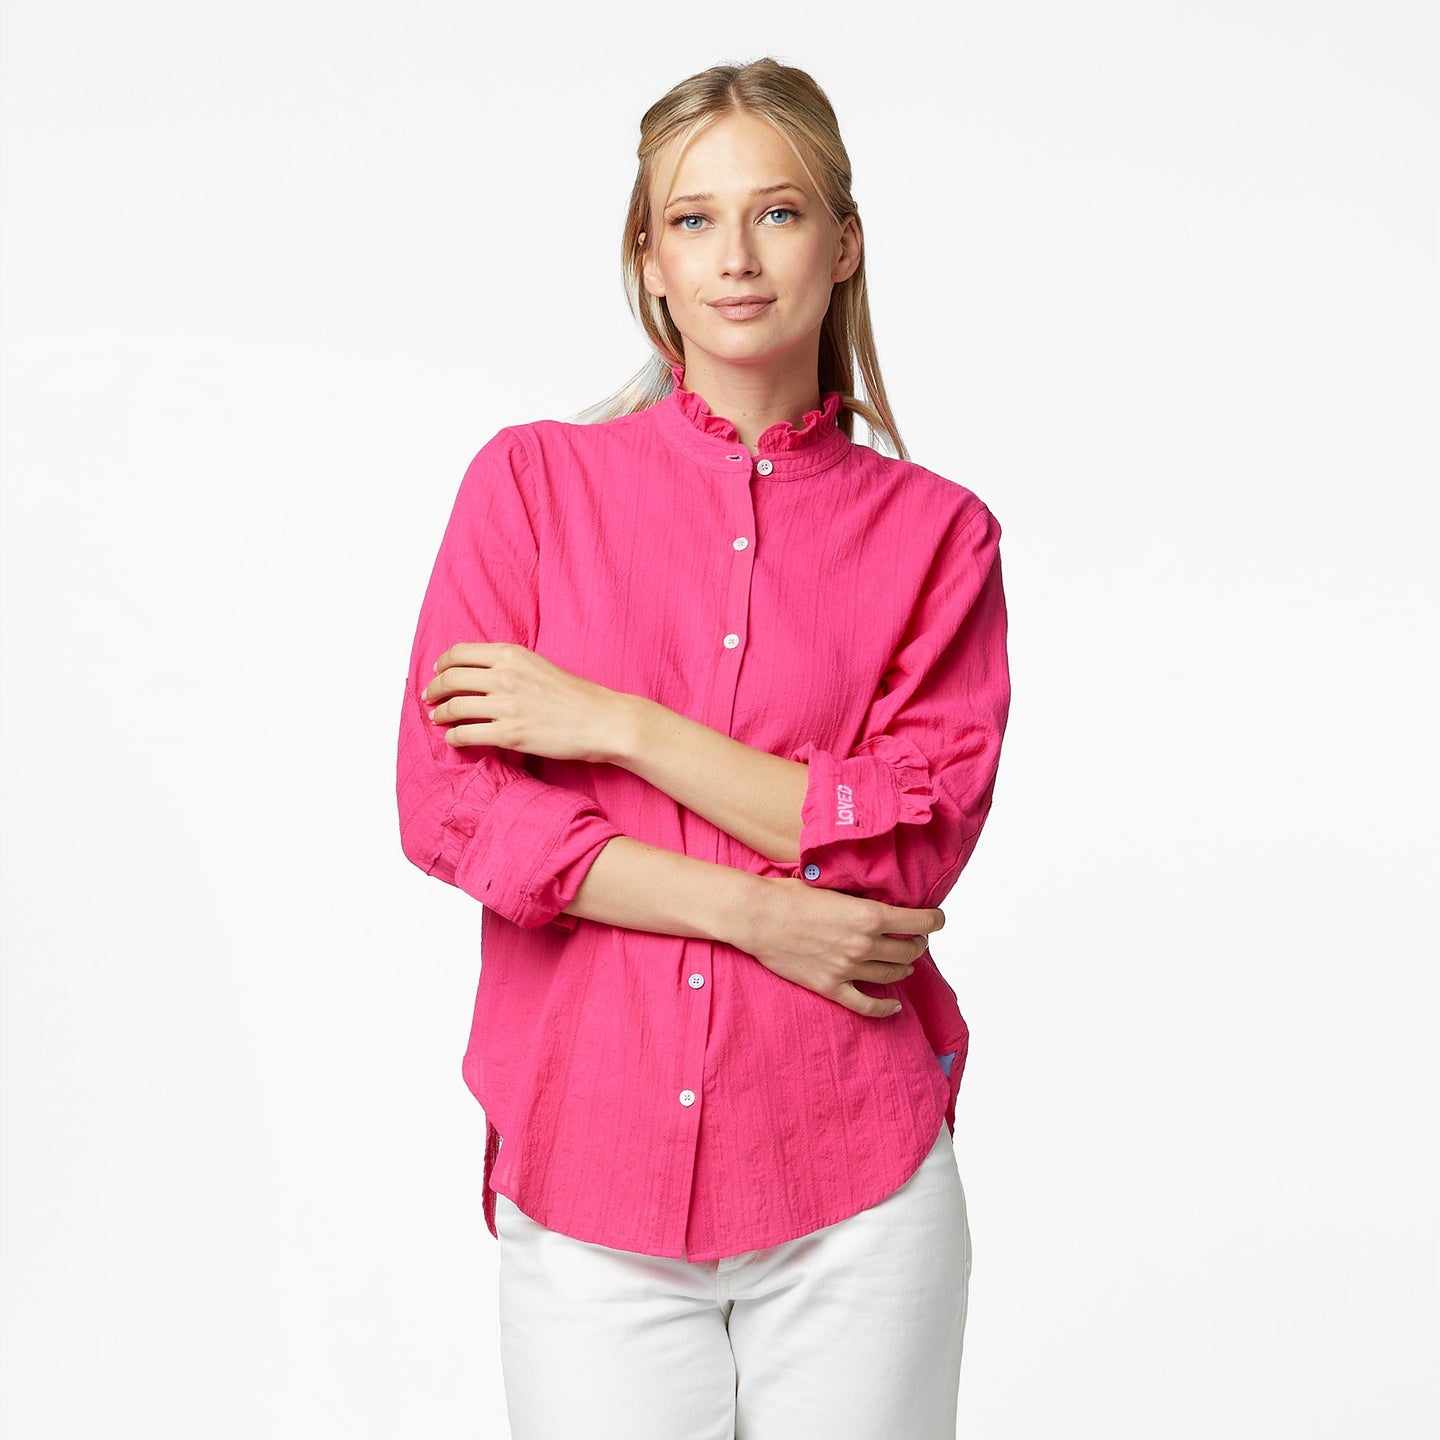 Kerri Rosenthal Mia Ruffle Shirt - Berry Pink